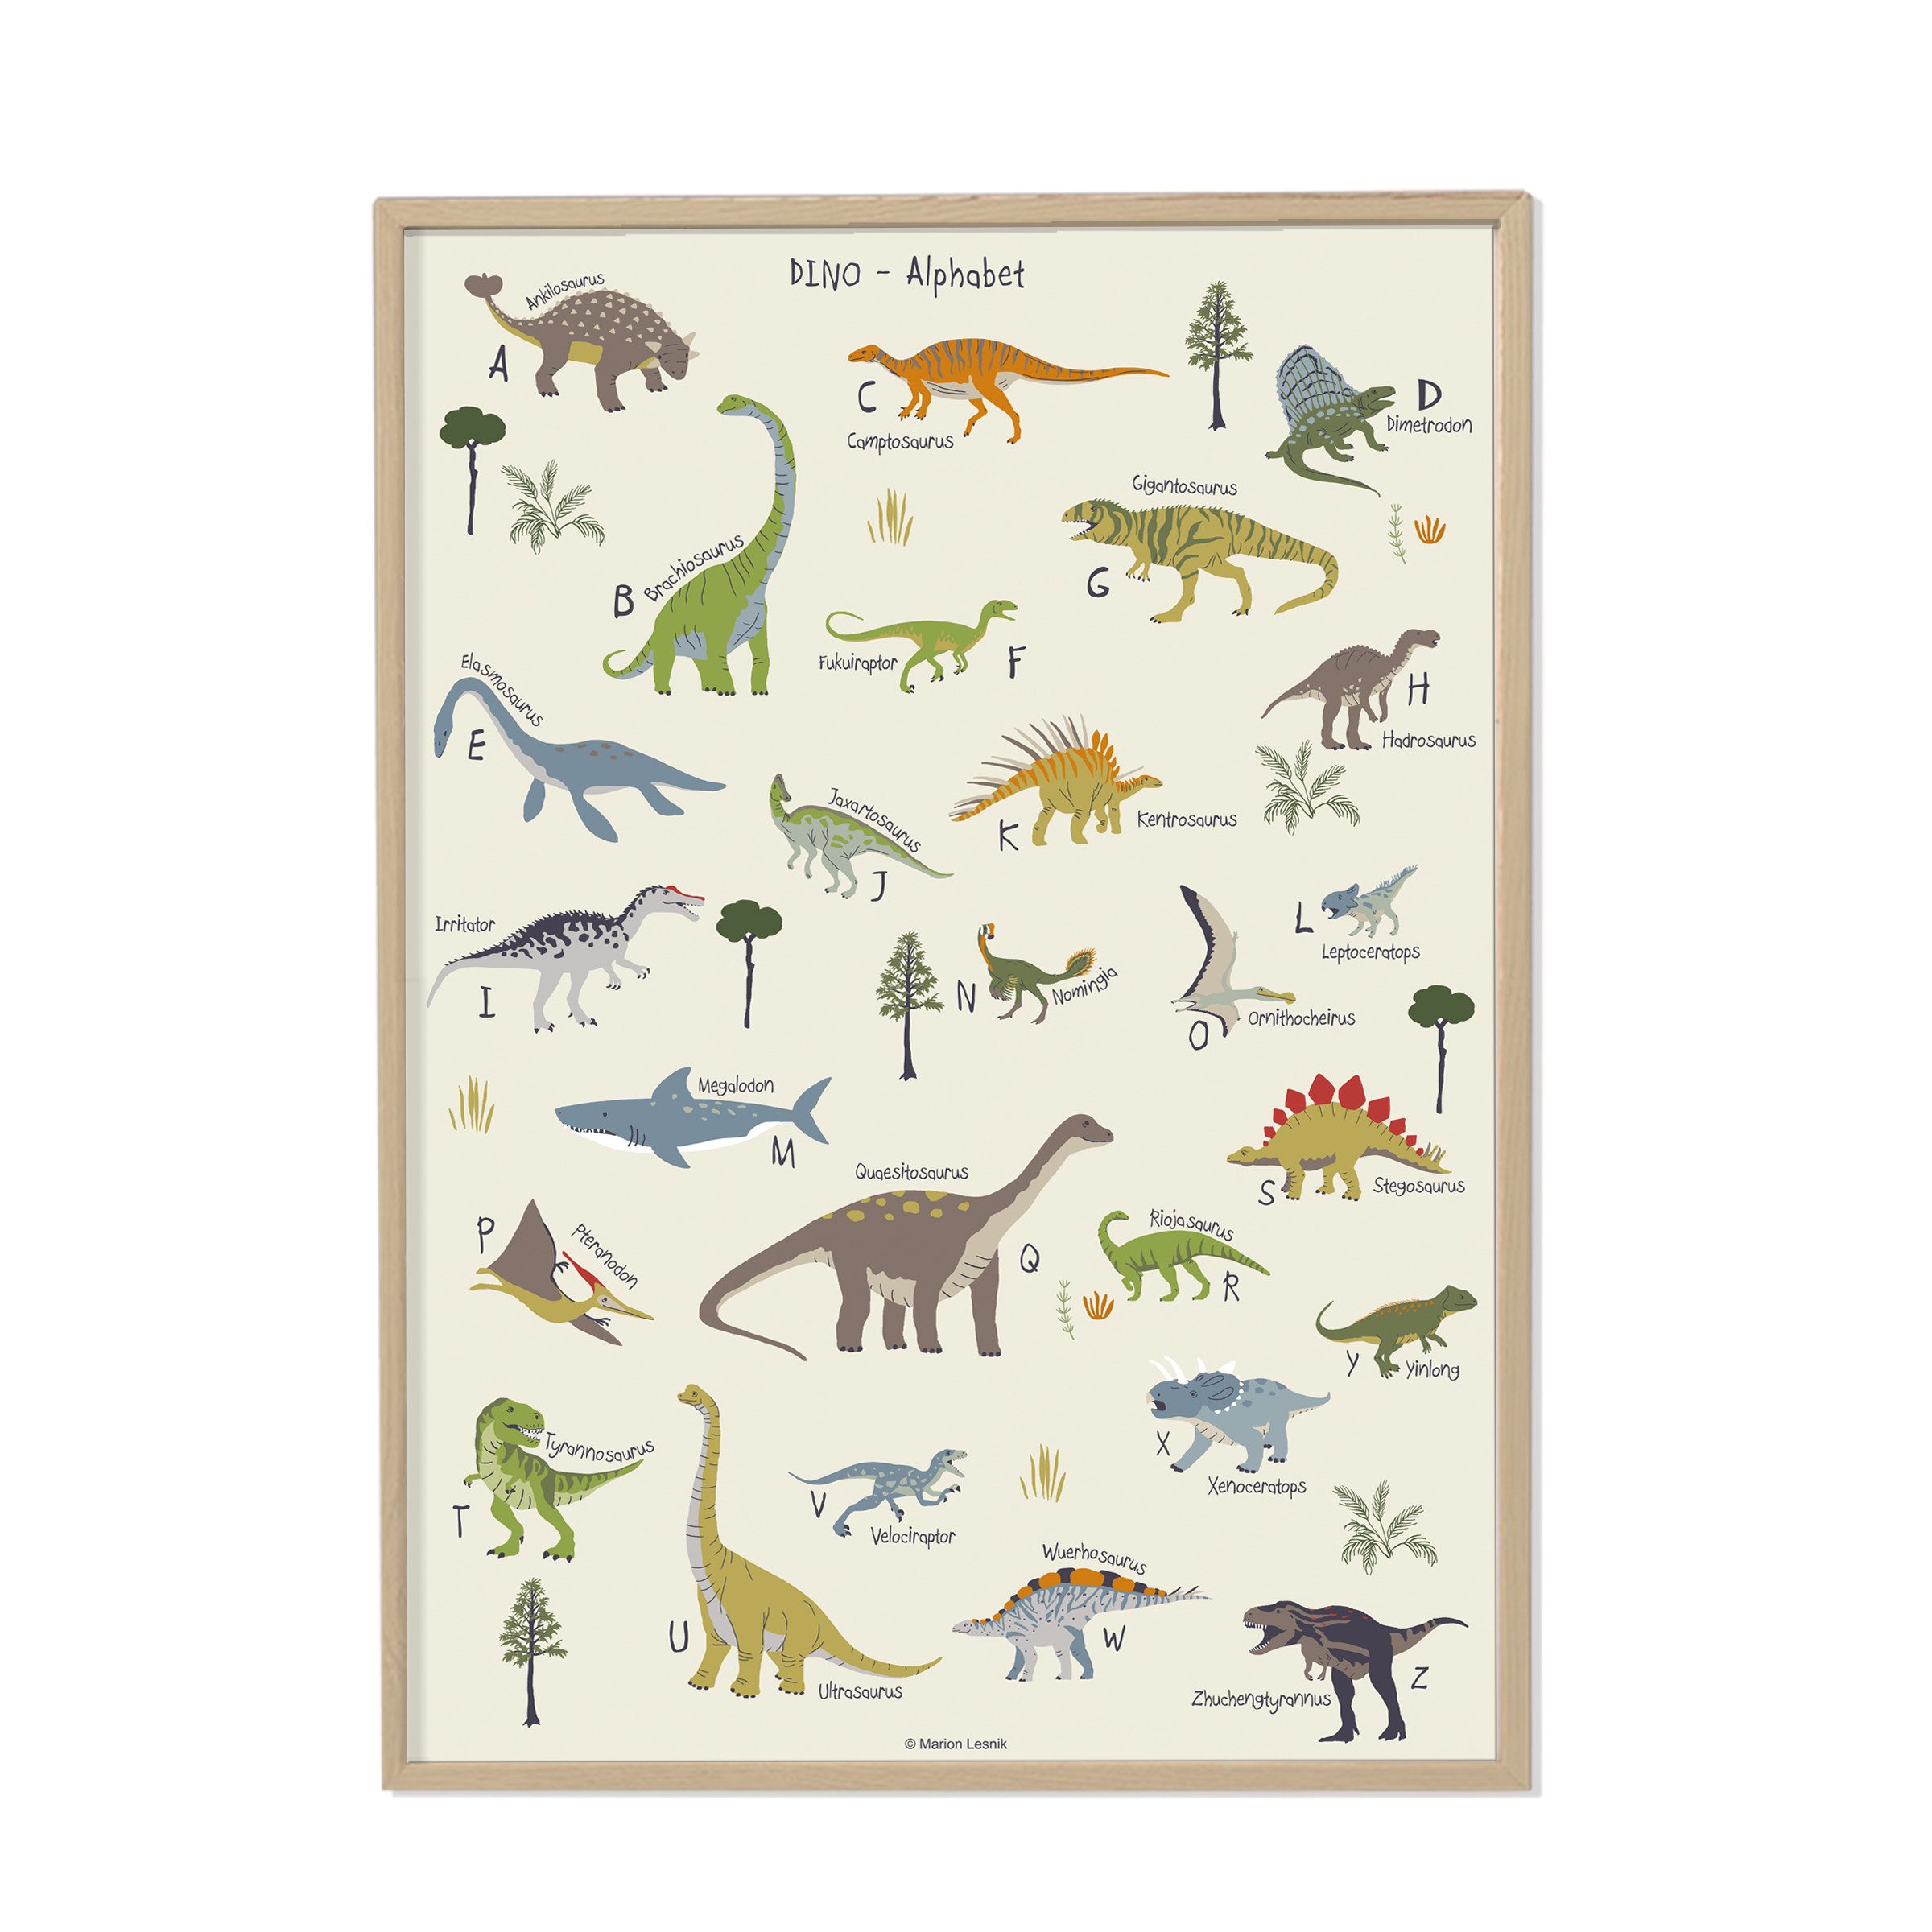 Designforlittleones Poster Dinosaurier ABC Poster, 50 x 70 cm groß, Lernposter